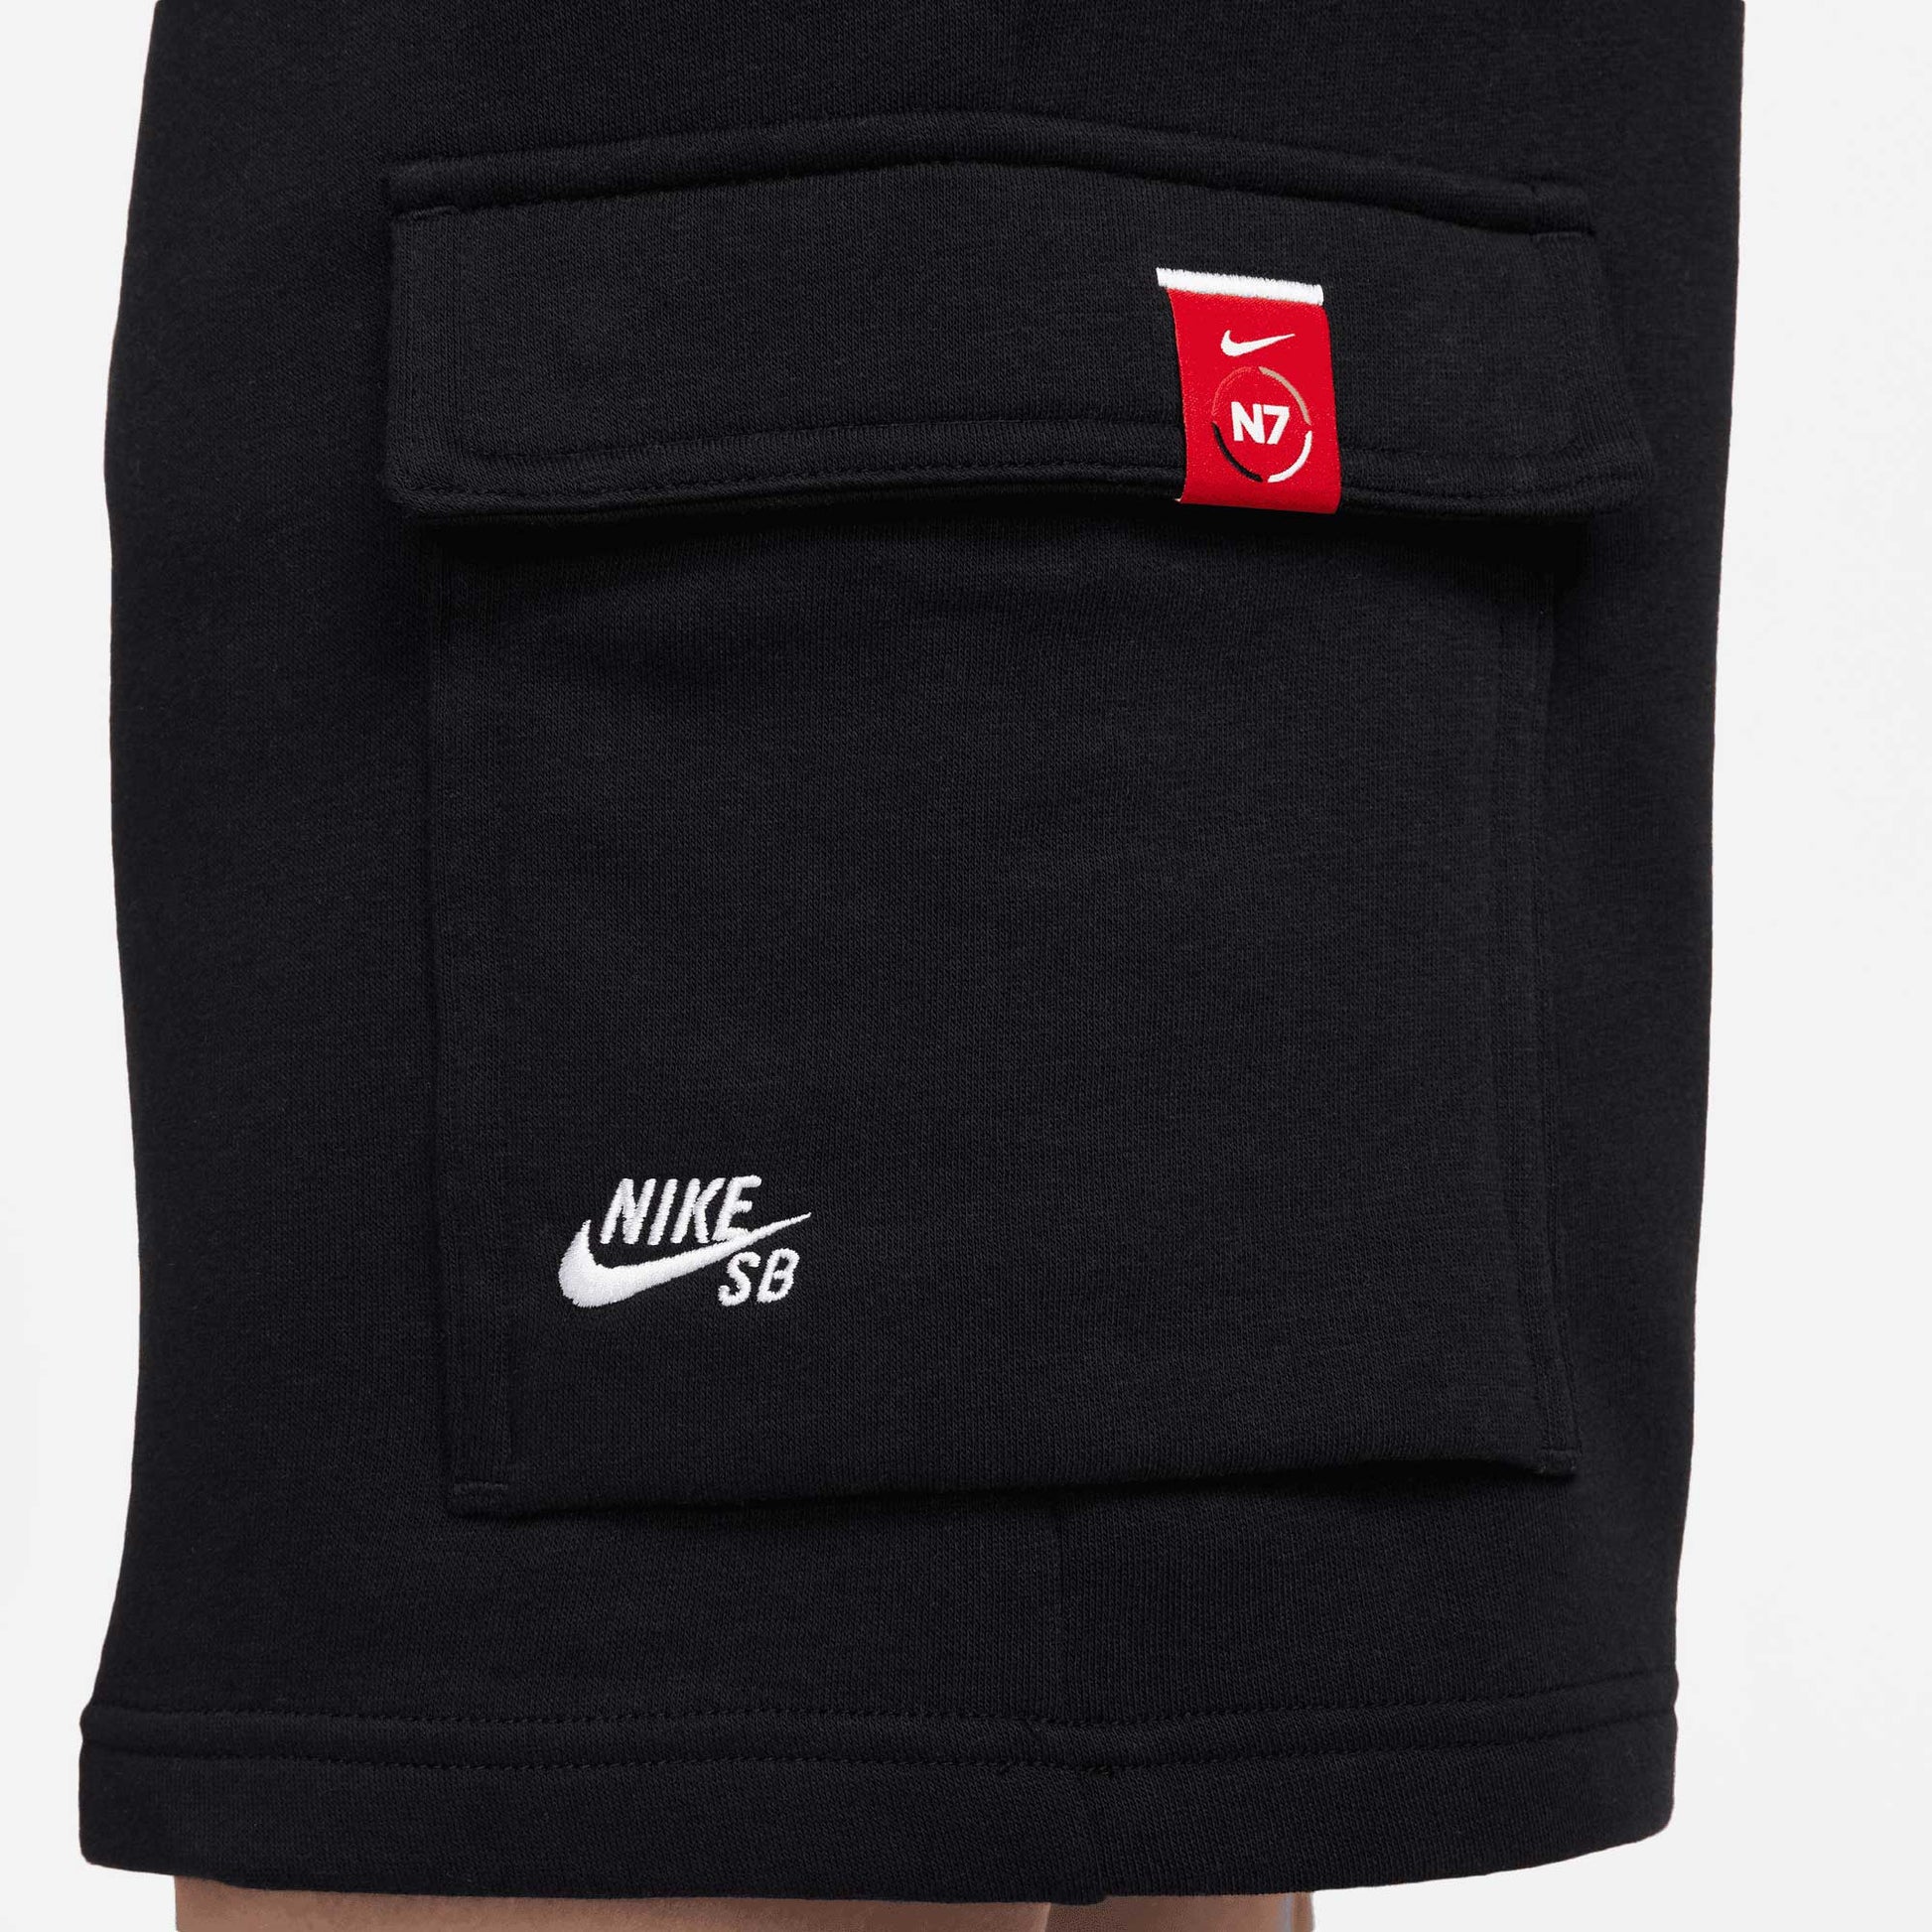 Nike SB N7 Fleece Cargo Shorts, black/university red - Tiki Room Skateboards - 8